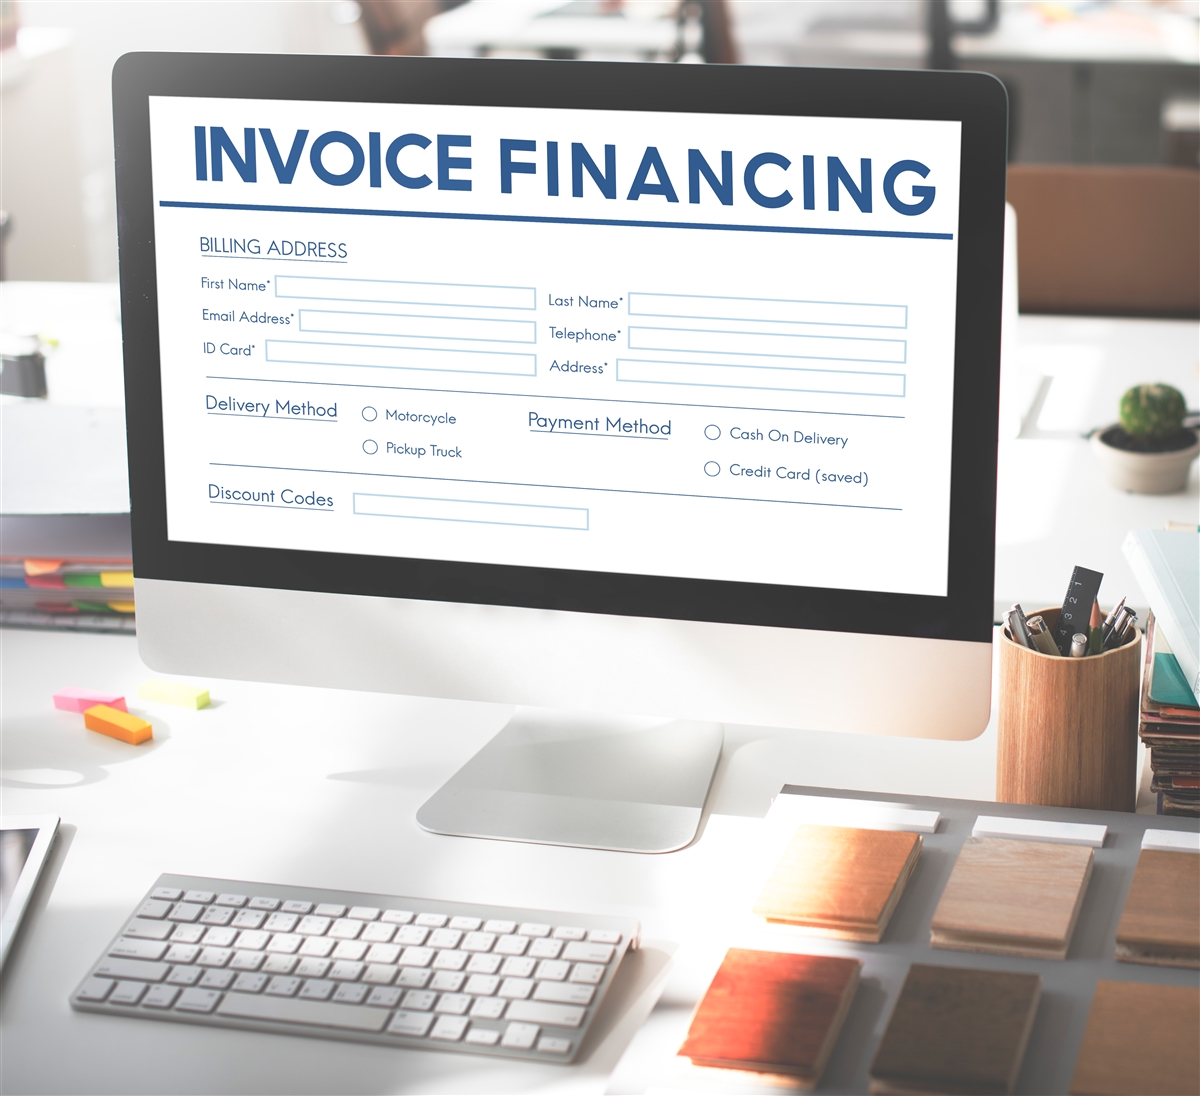 Invoice financing: A cashflow management alternative